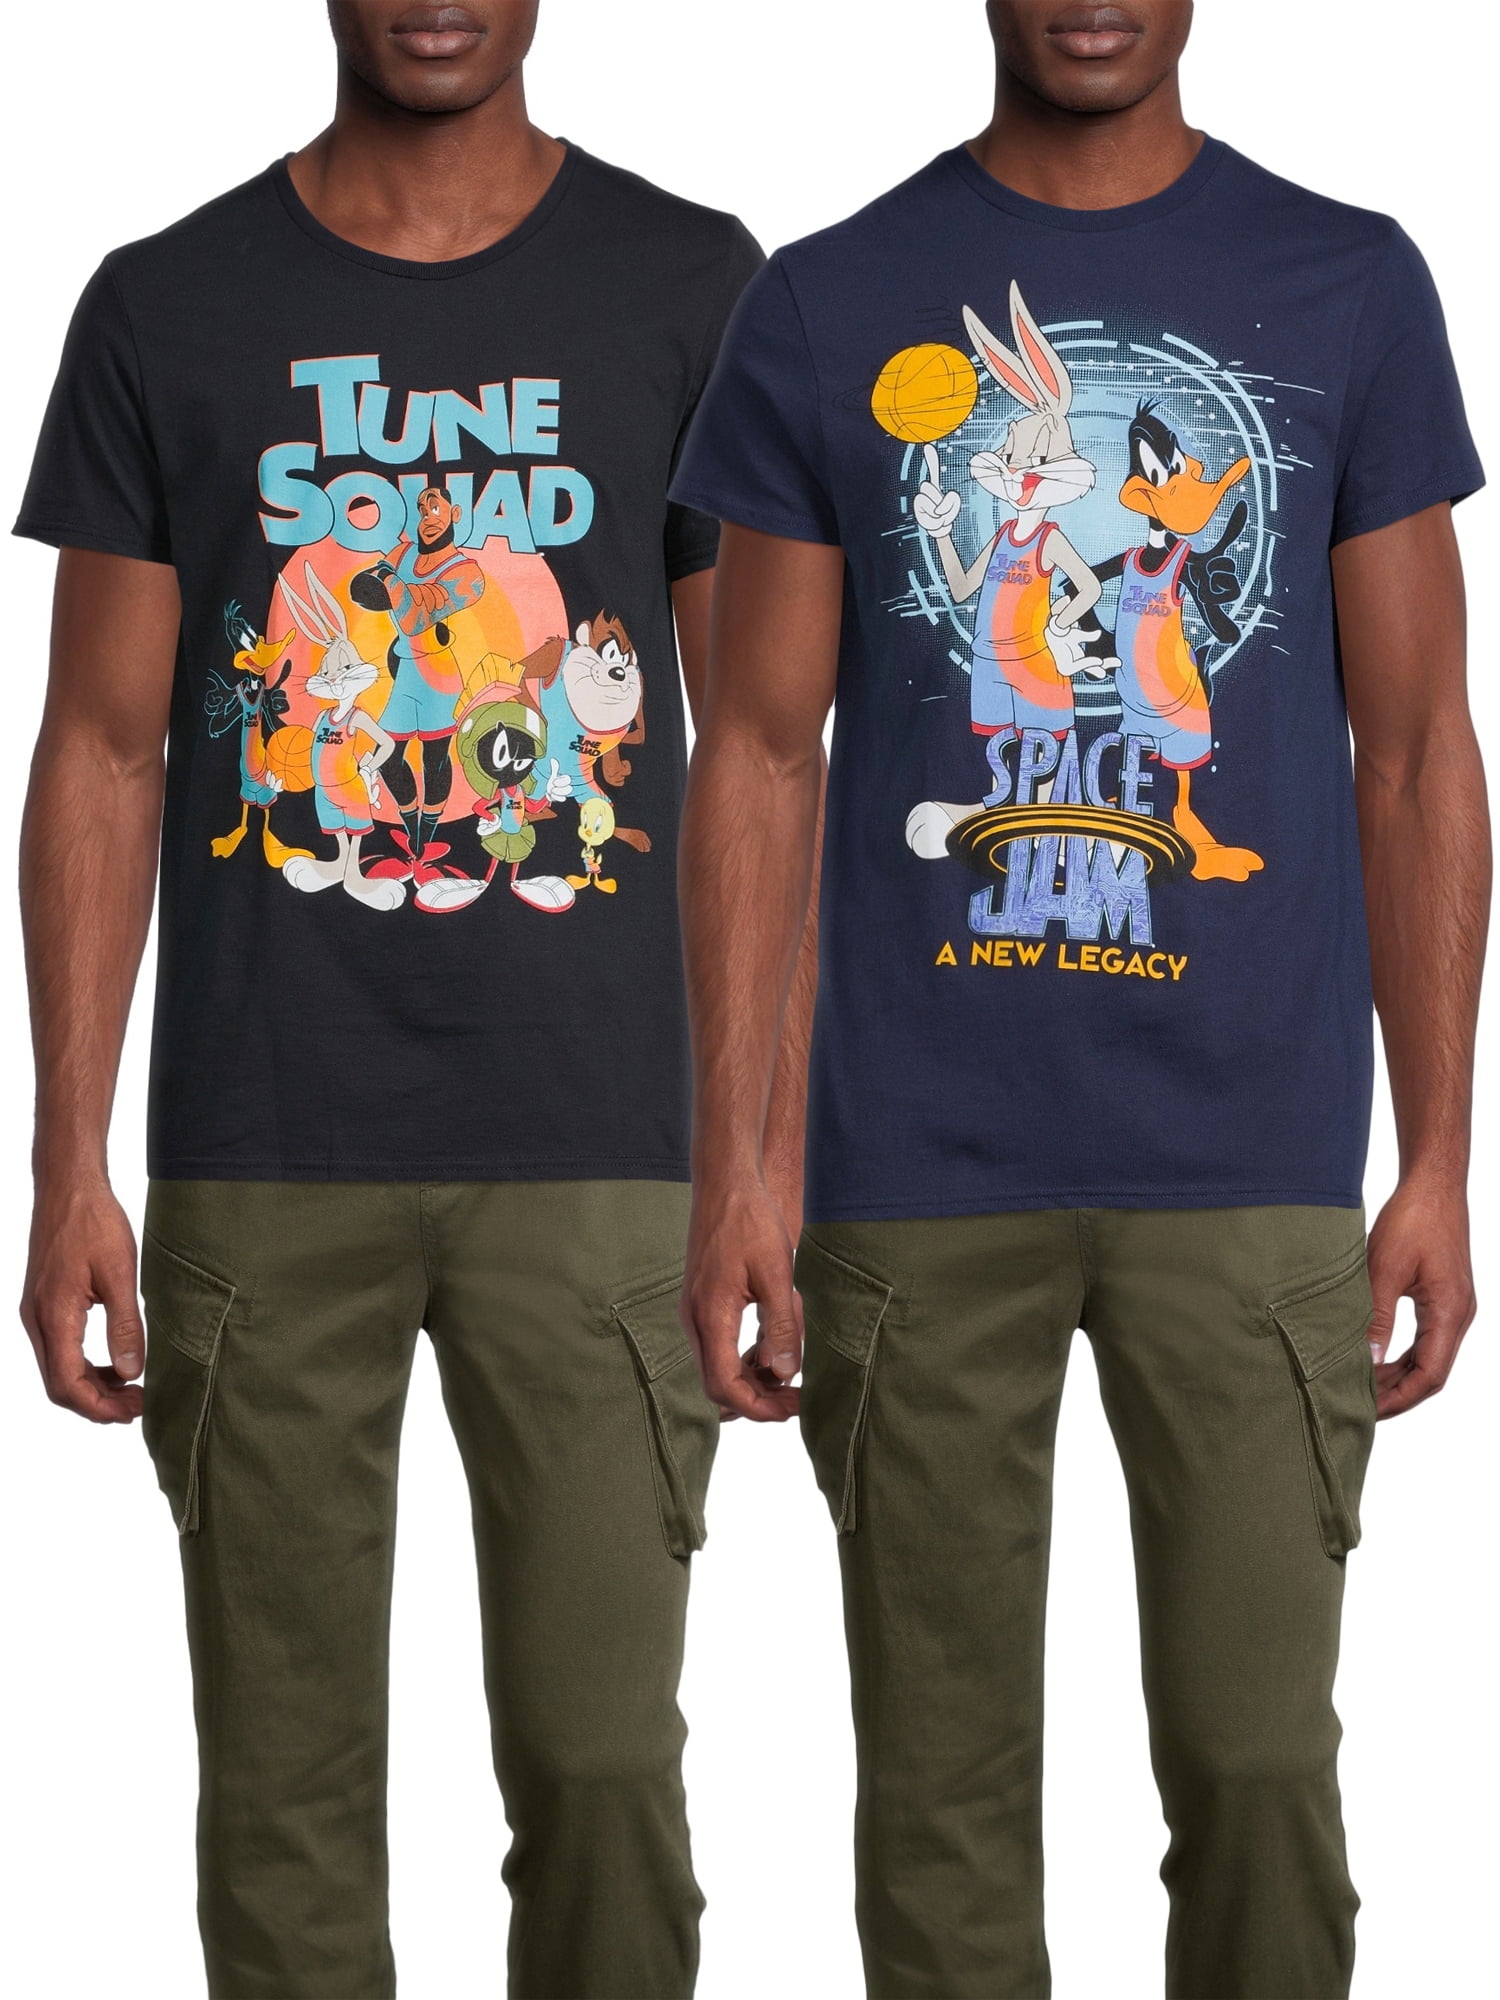 Tune Squad Family Shirt Space jam 2 Sweatshirt Basketball Shirt Space Jam 2 Looney Tunes Shirt, A New Legacy Shirt